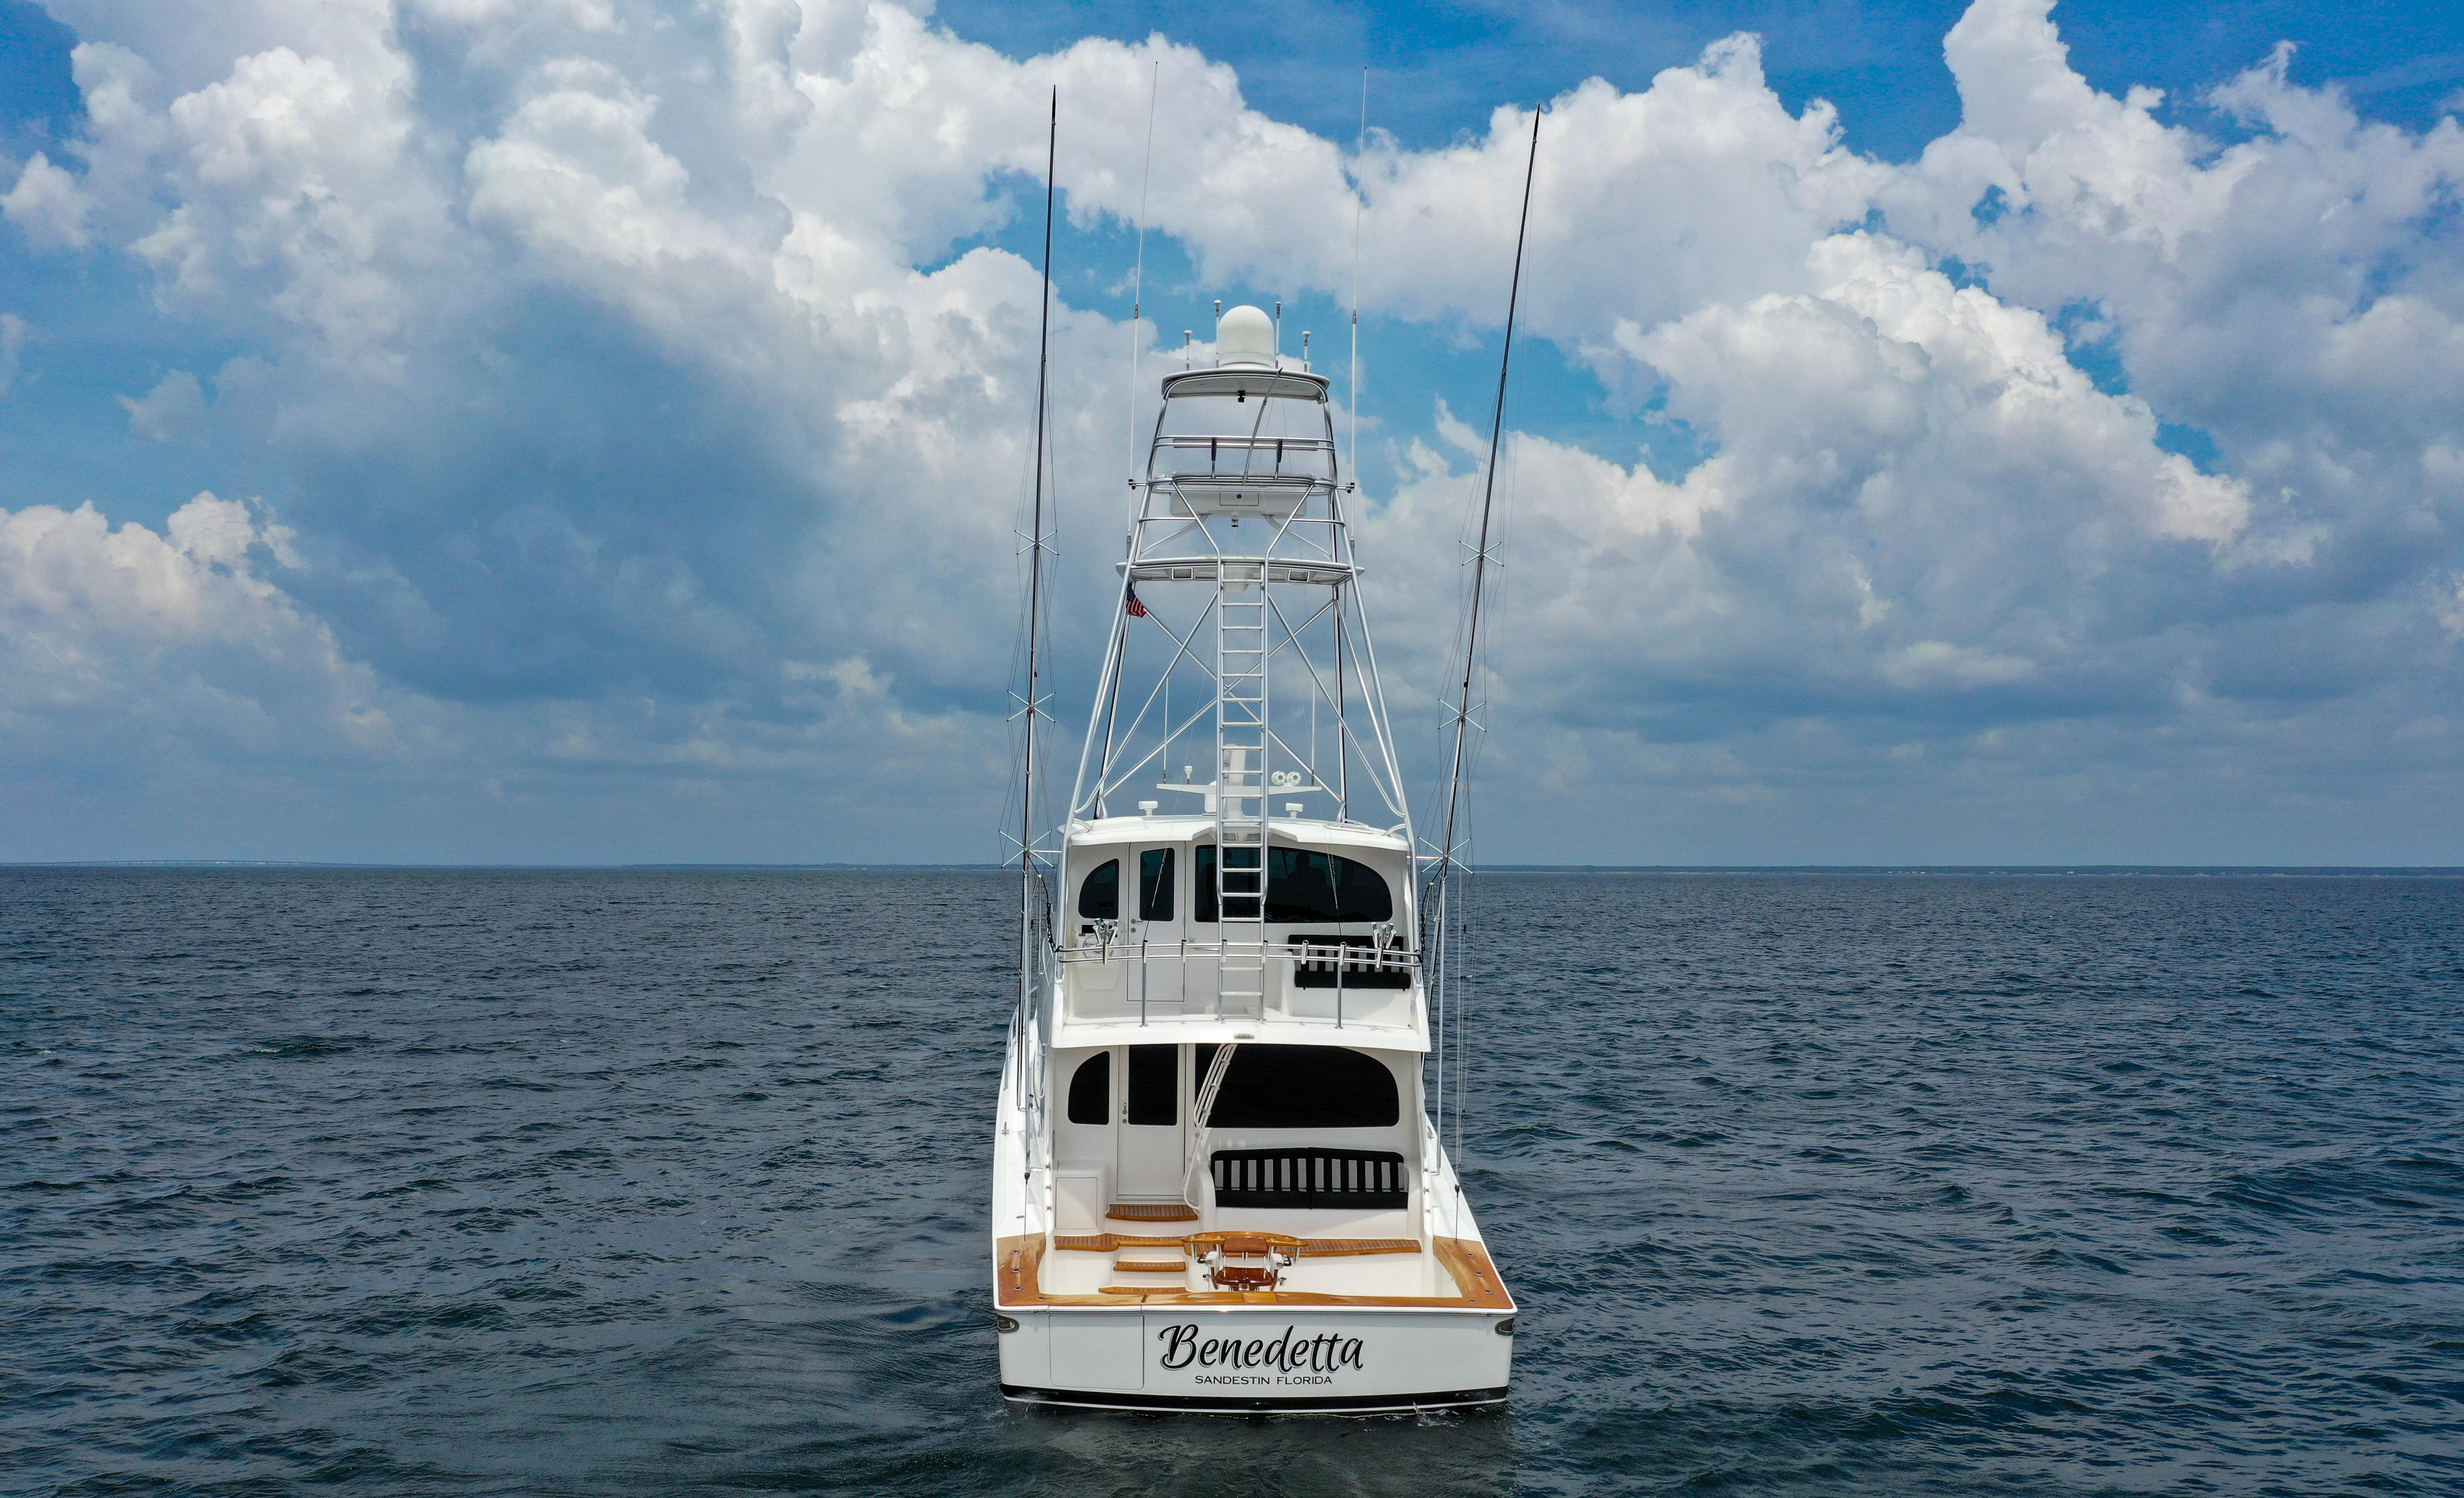 Benedetta Yacht for Sale  70 Viking Yachts North Palm Beach, FL